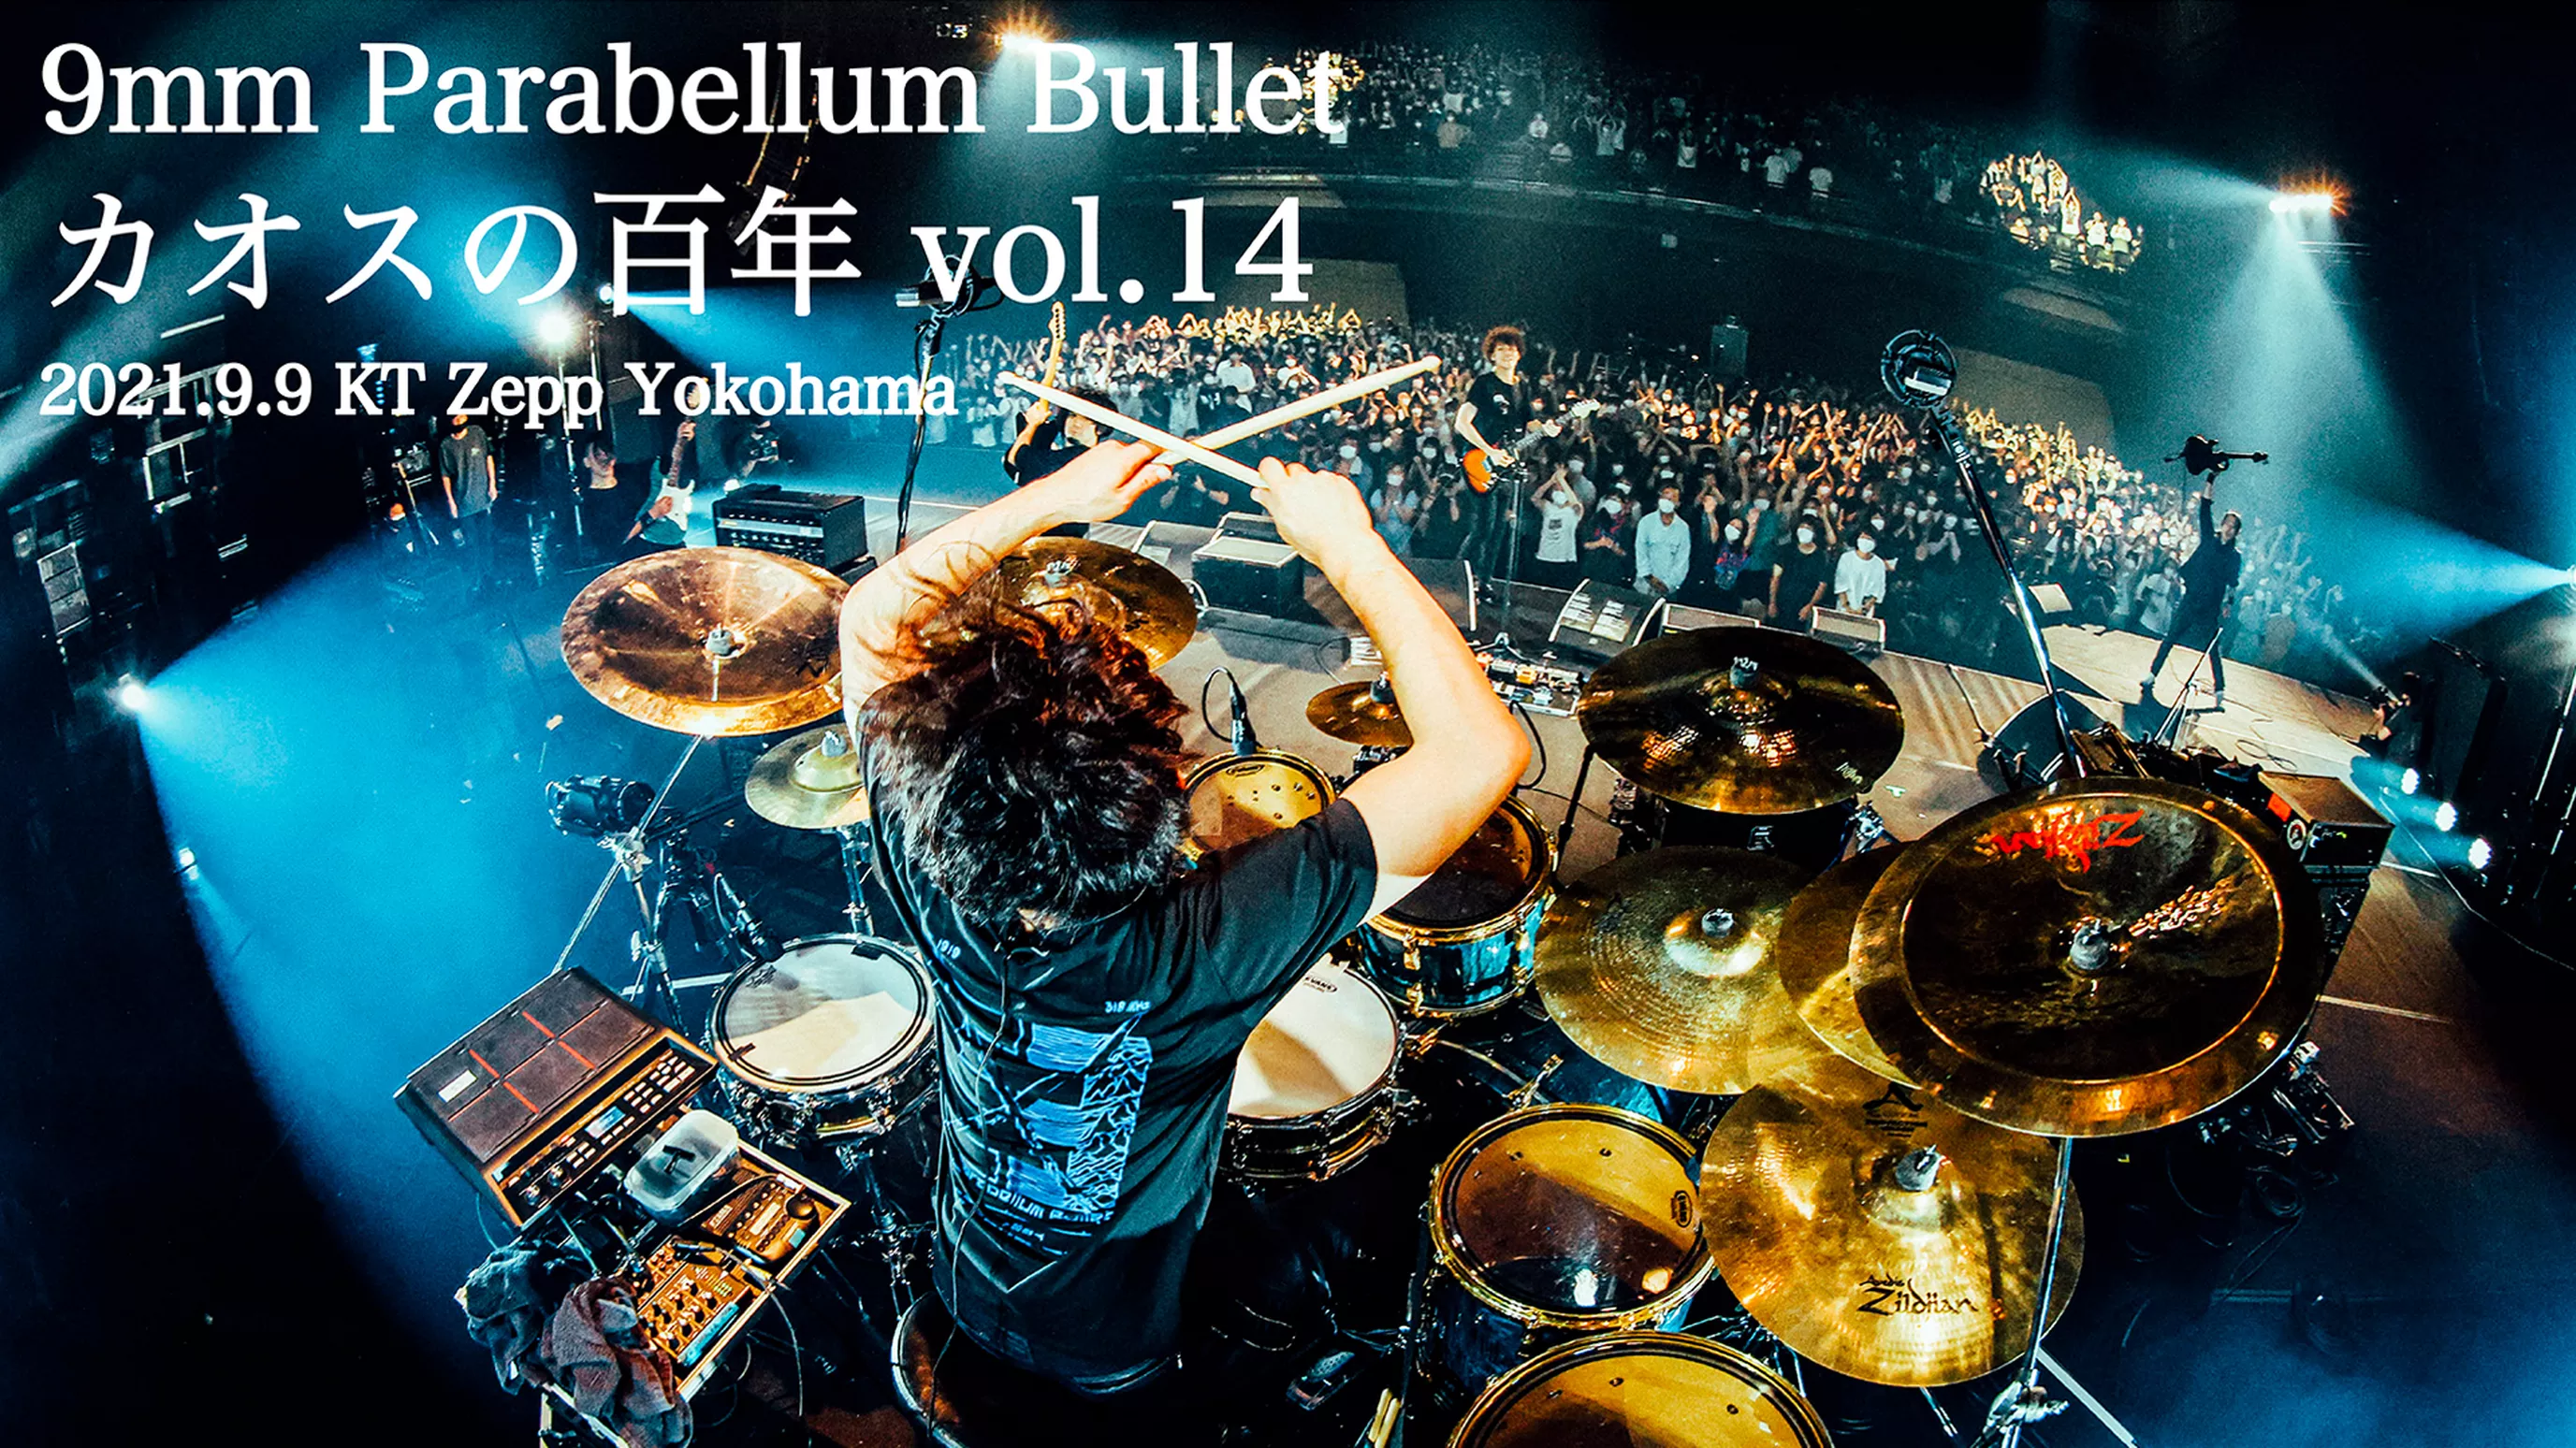 9mm Parabellum Bullet presents 「カオスの百年 vol.14」